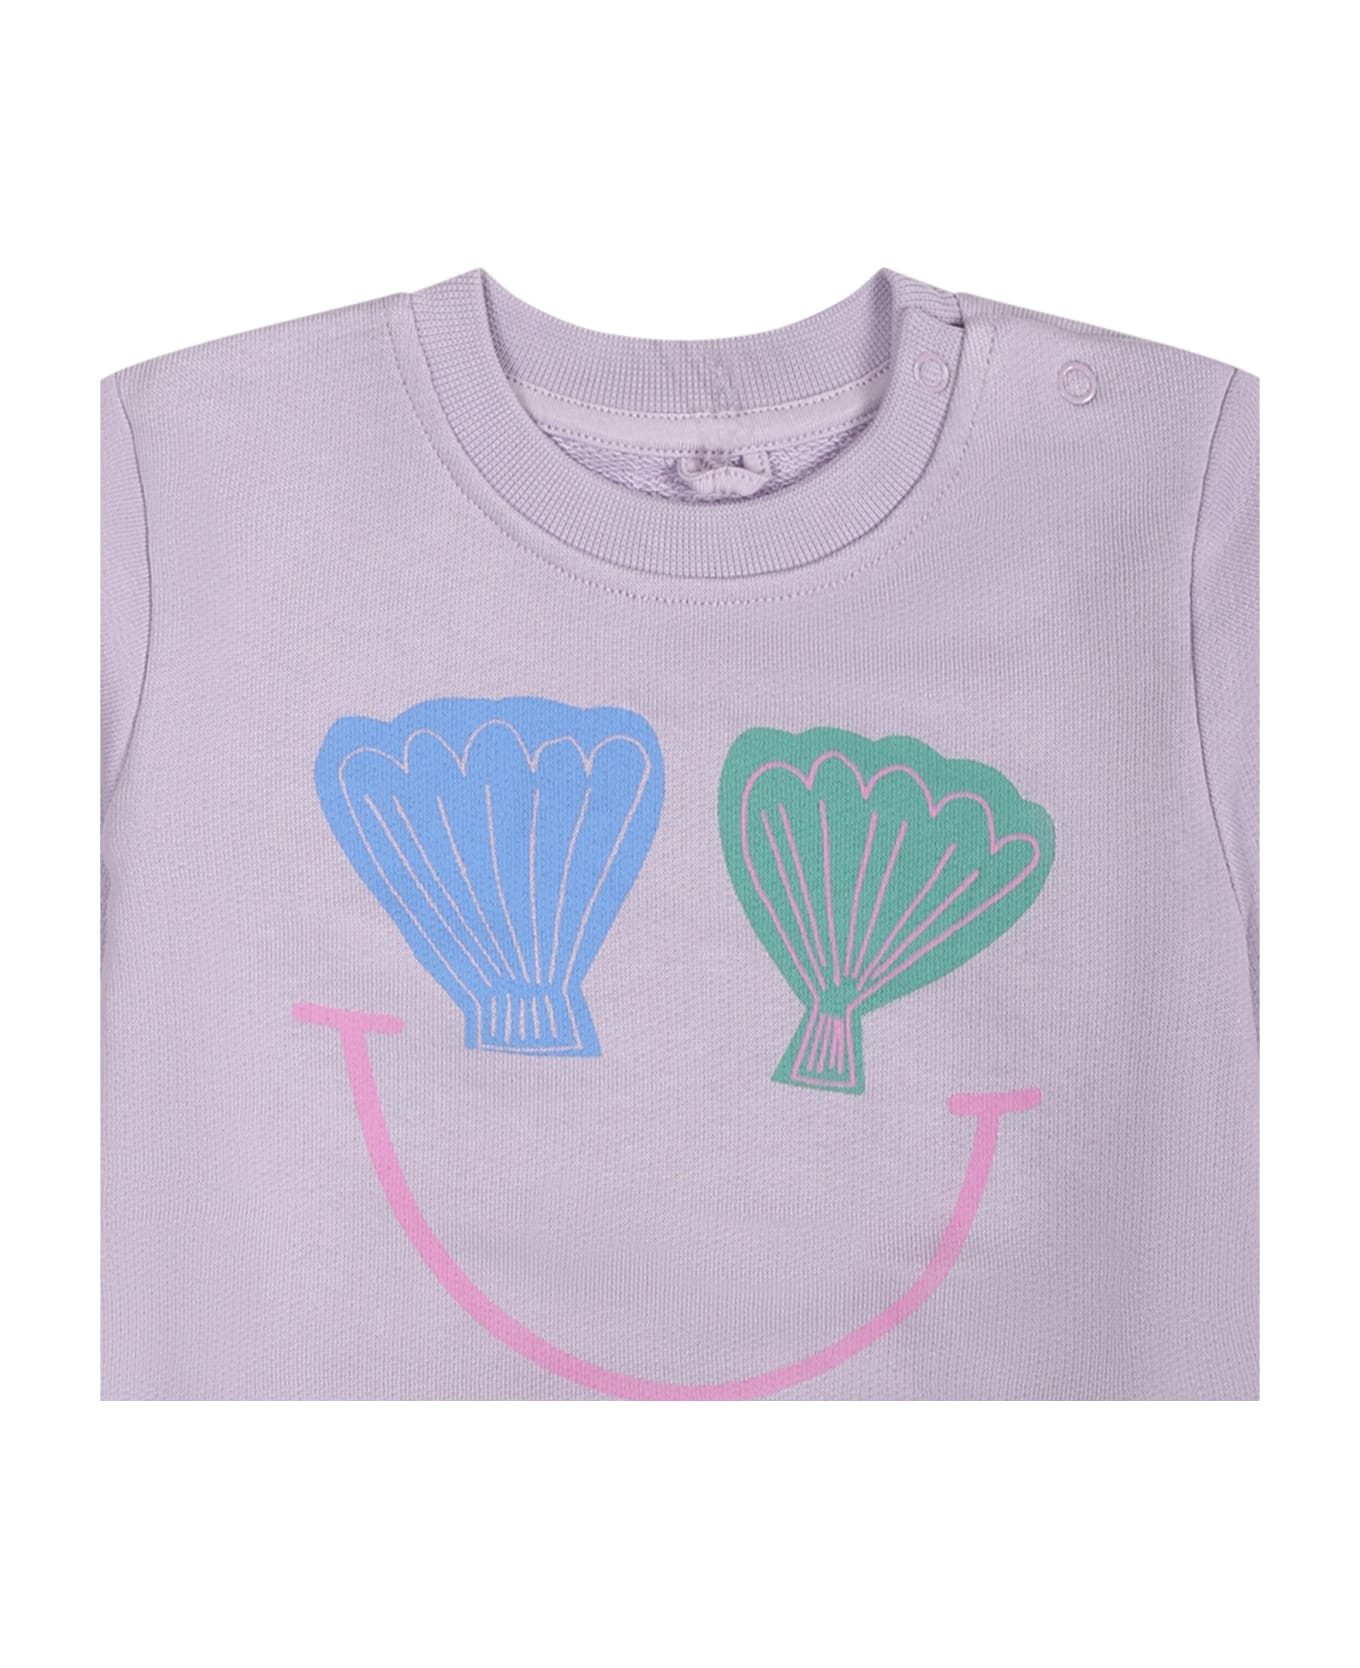 Stella McCartney Kids Purple Sweatshirt For Baby Girl With Smiley And Shells - Violet ニットウェア＆スウェットシャツ